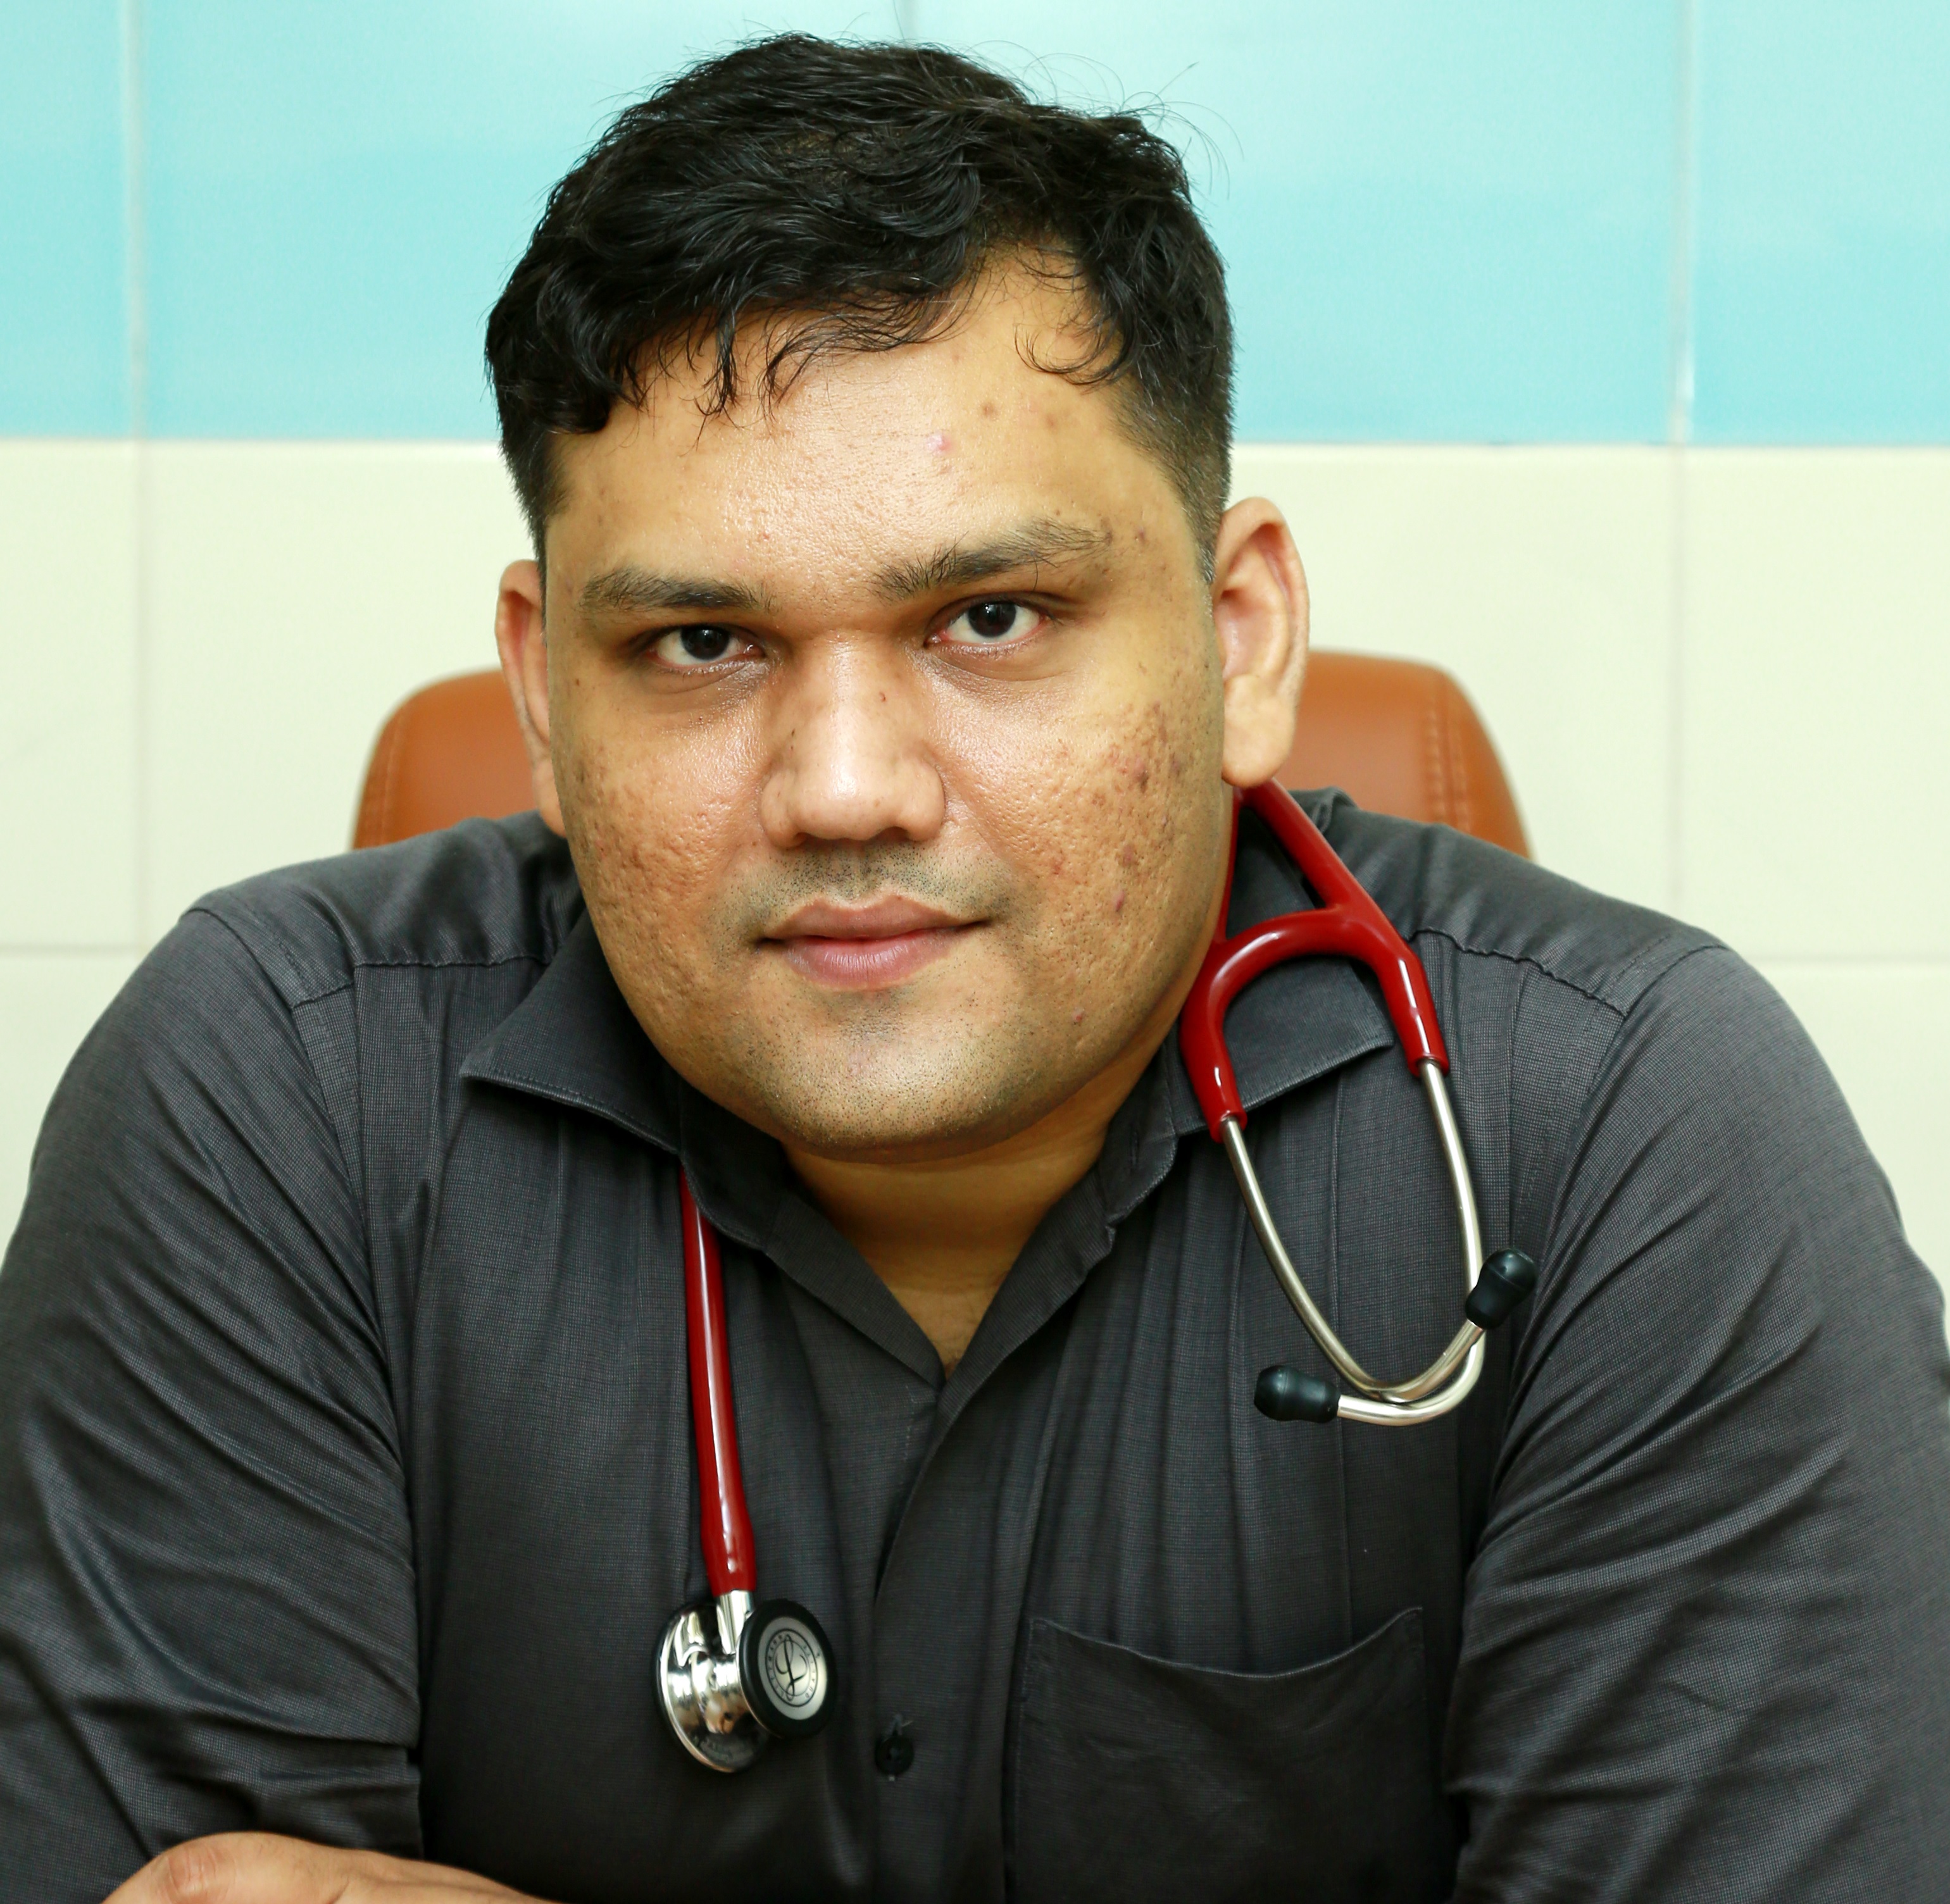 Malabar Hospital Pvt Ltd_Doctor